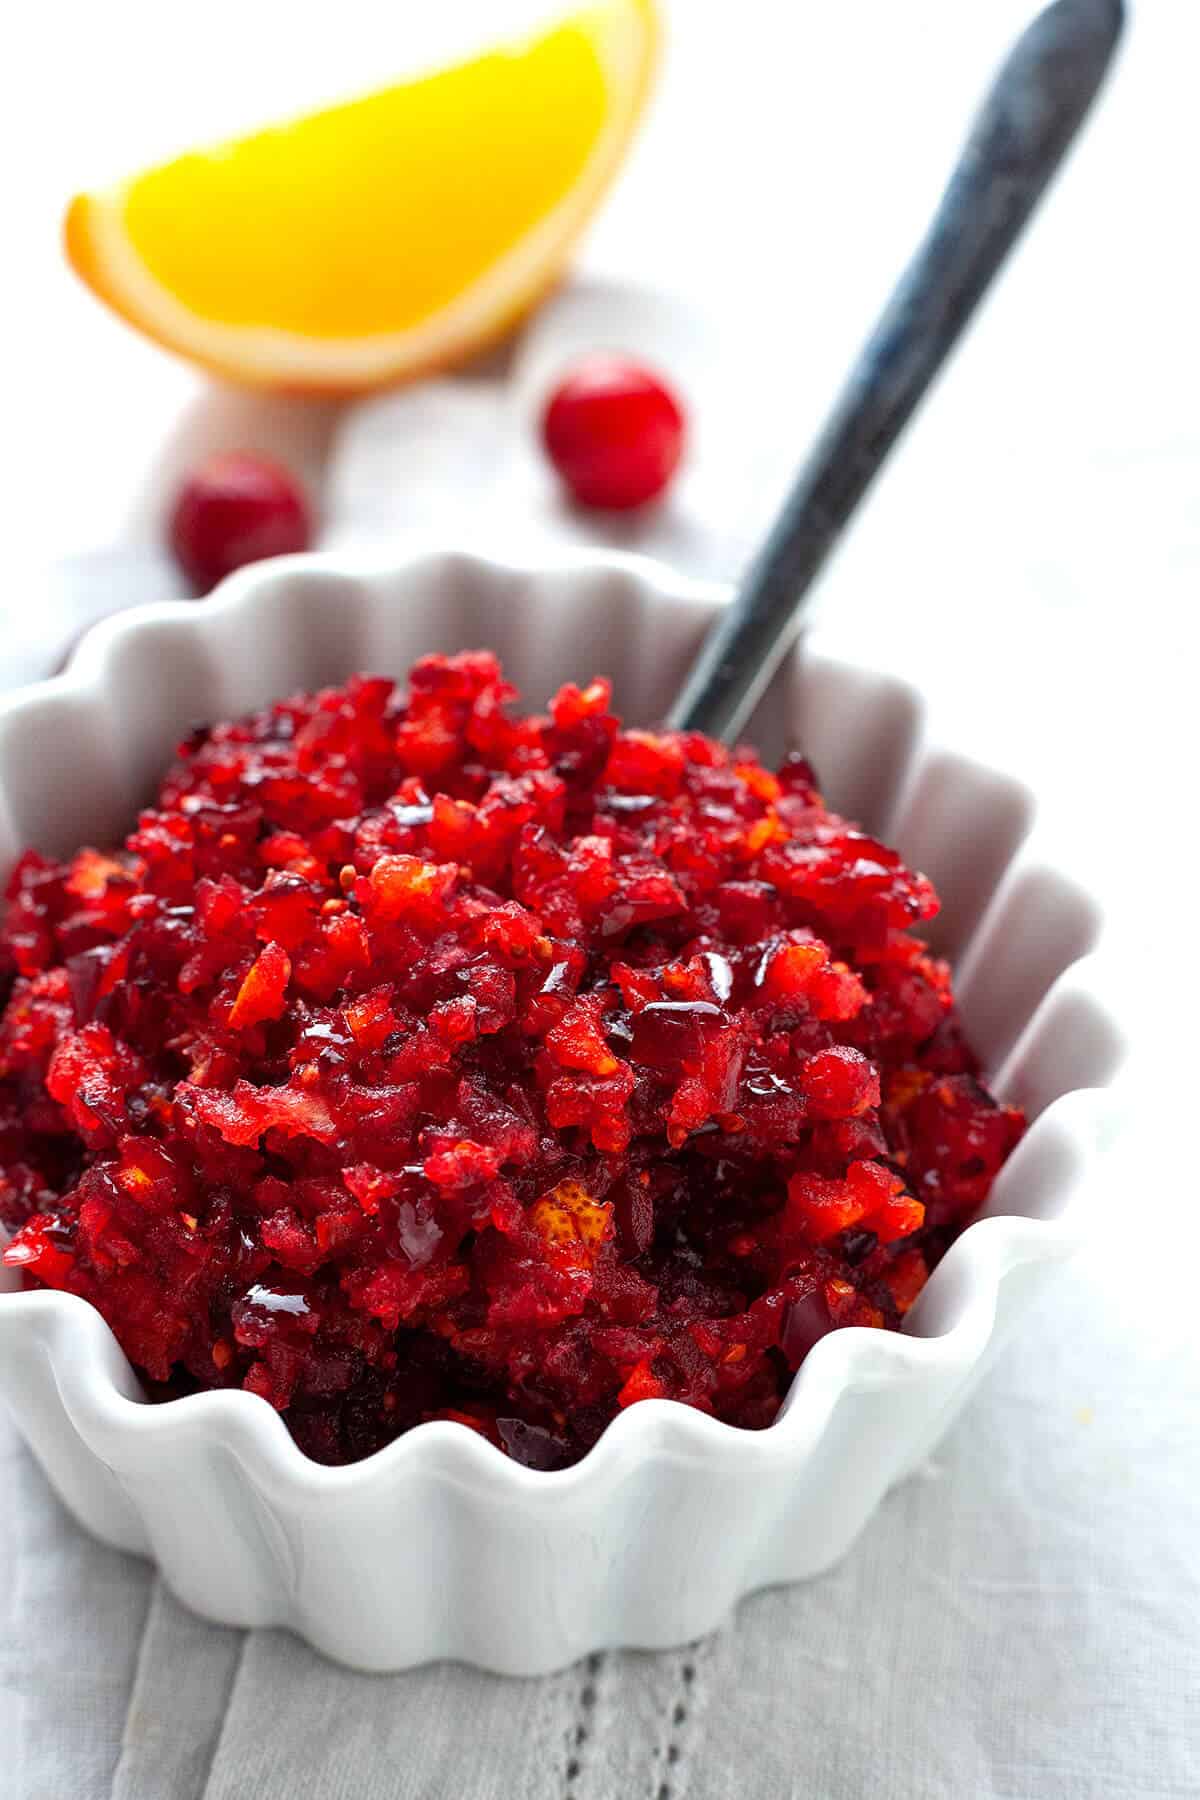 How to Make Cranberry Orange Relish